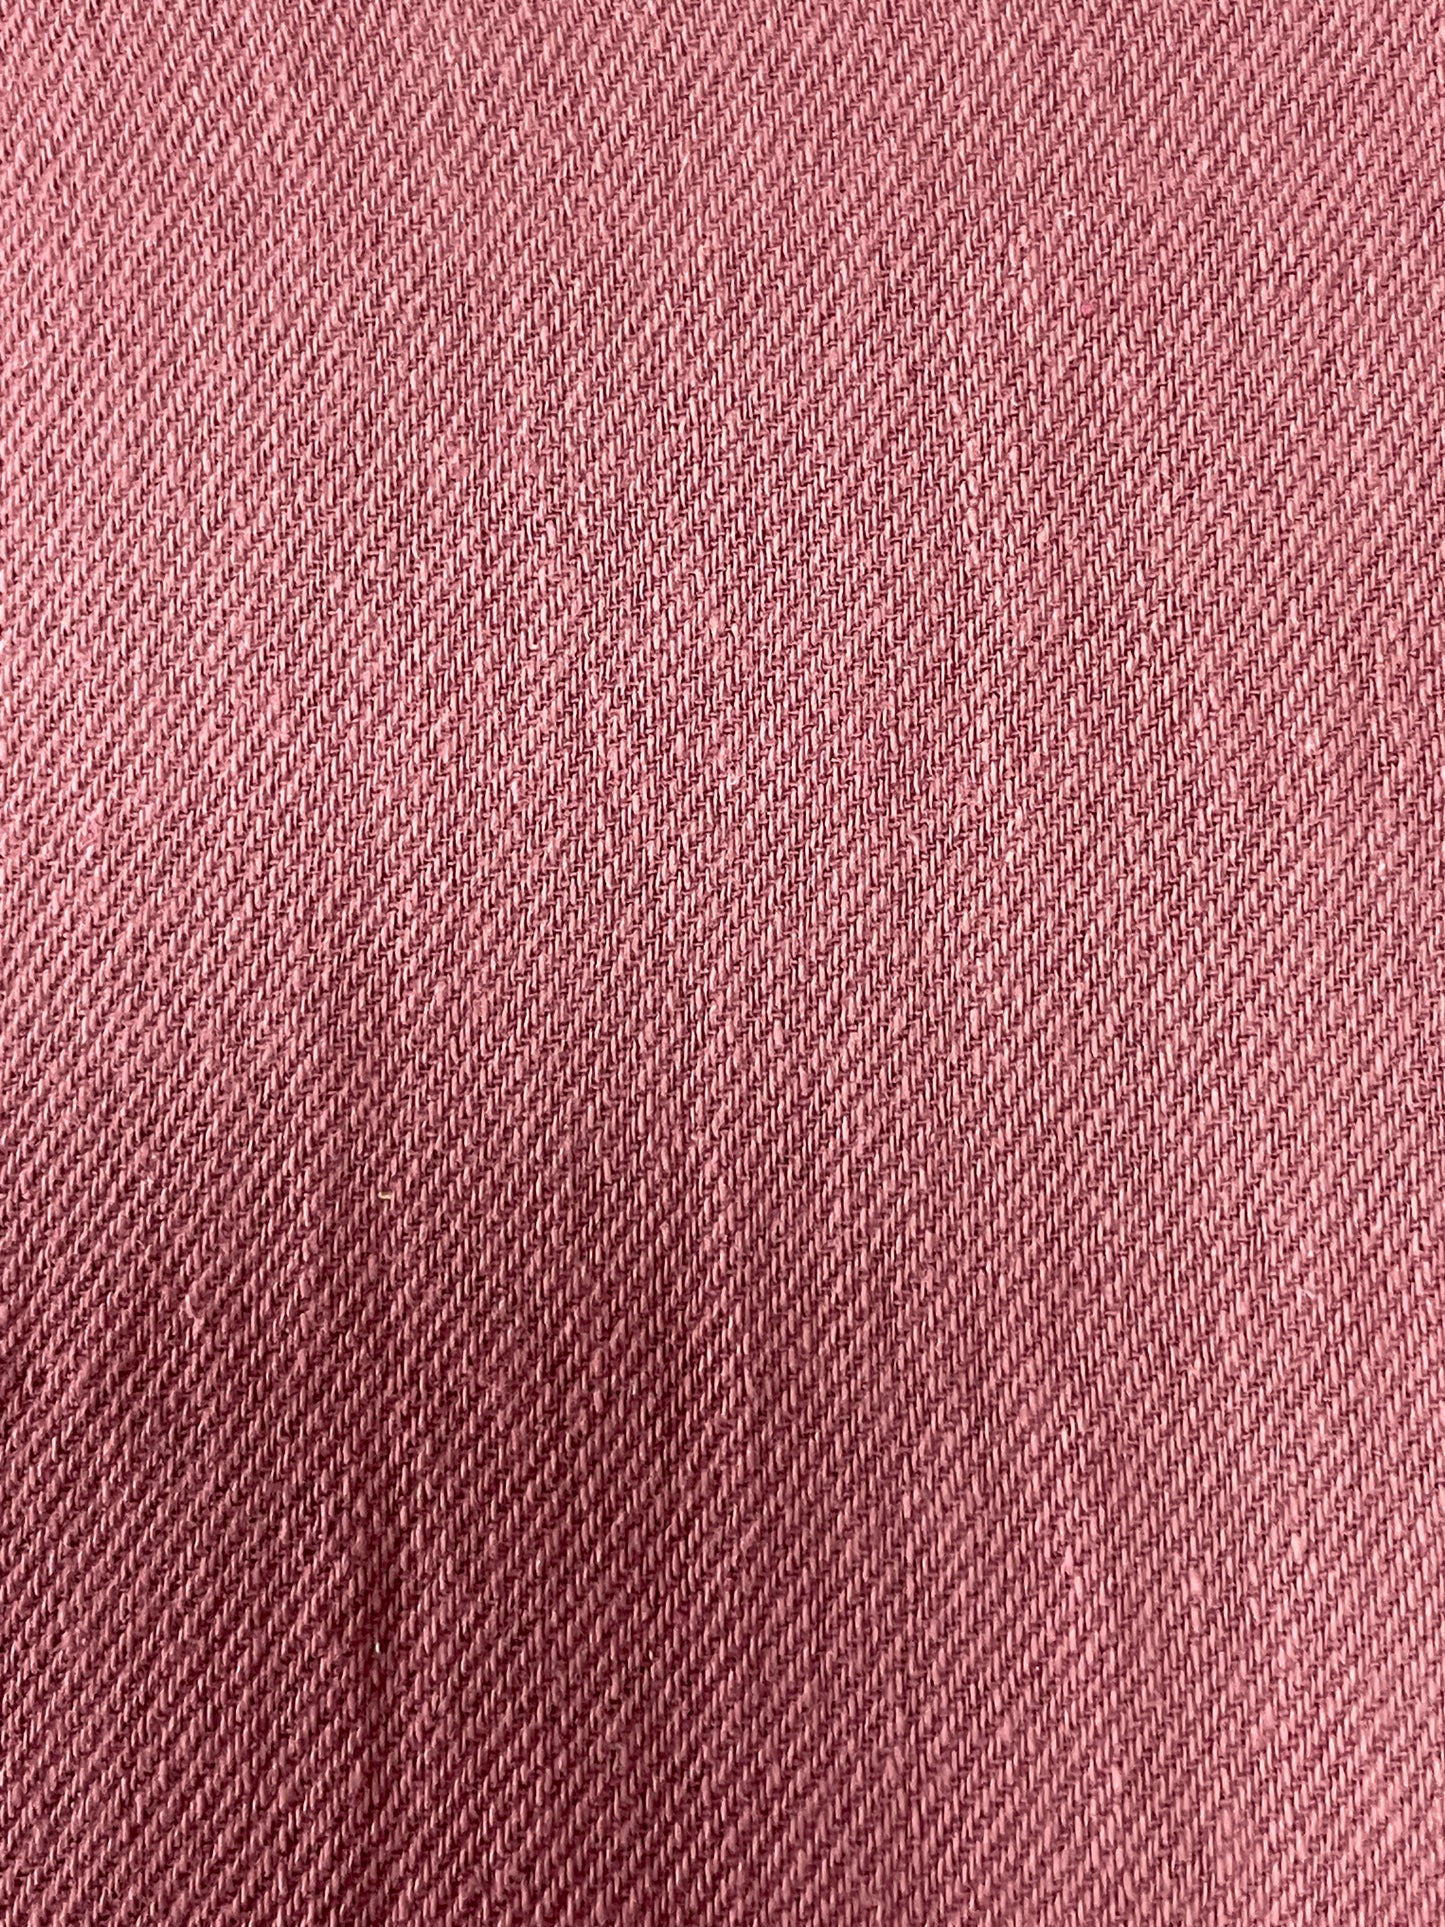 210g Linen Cotton Blended Fabric - Natasha Fabric